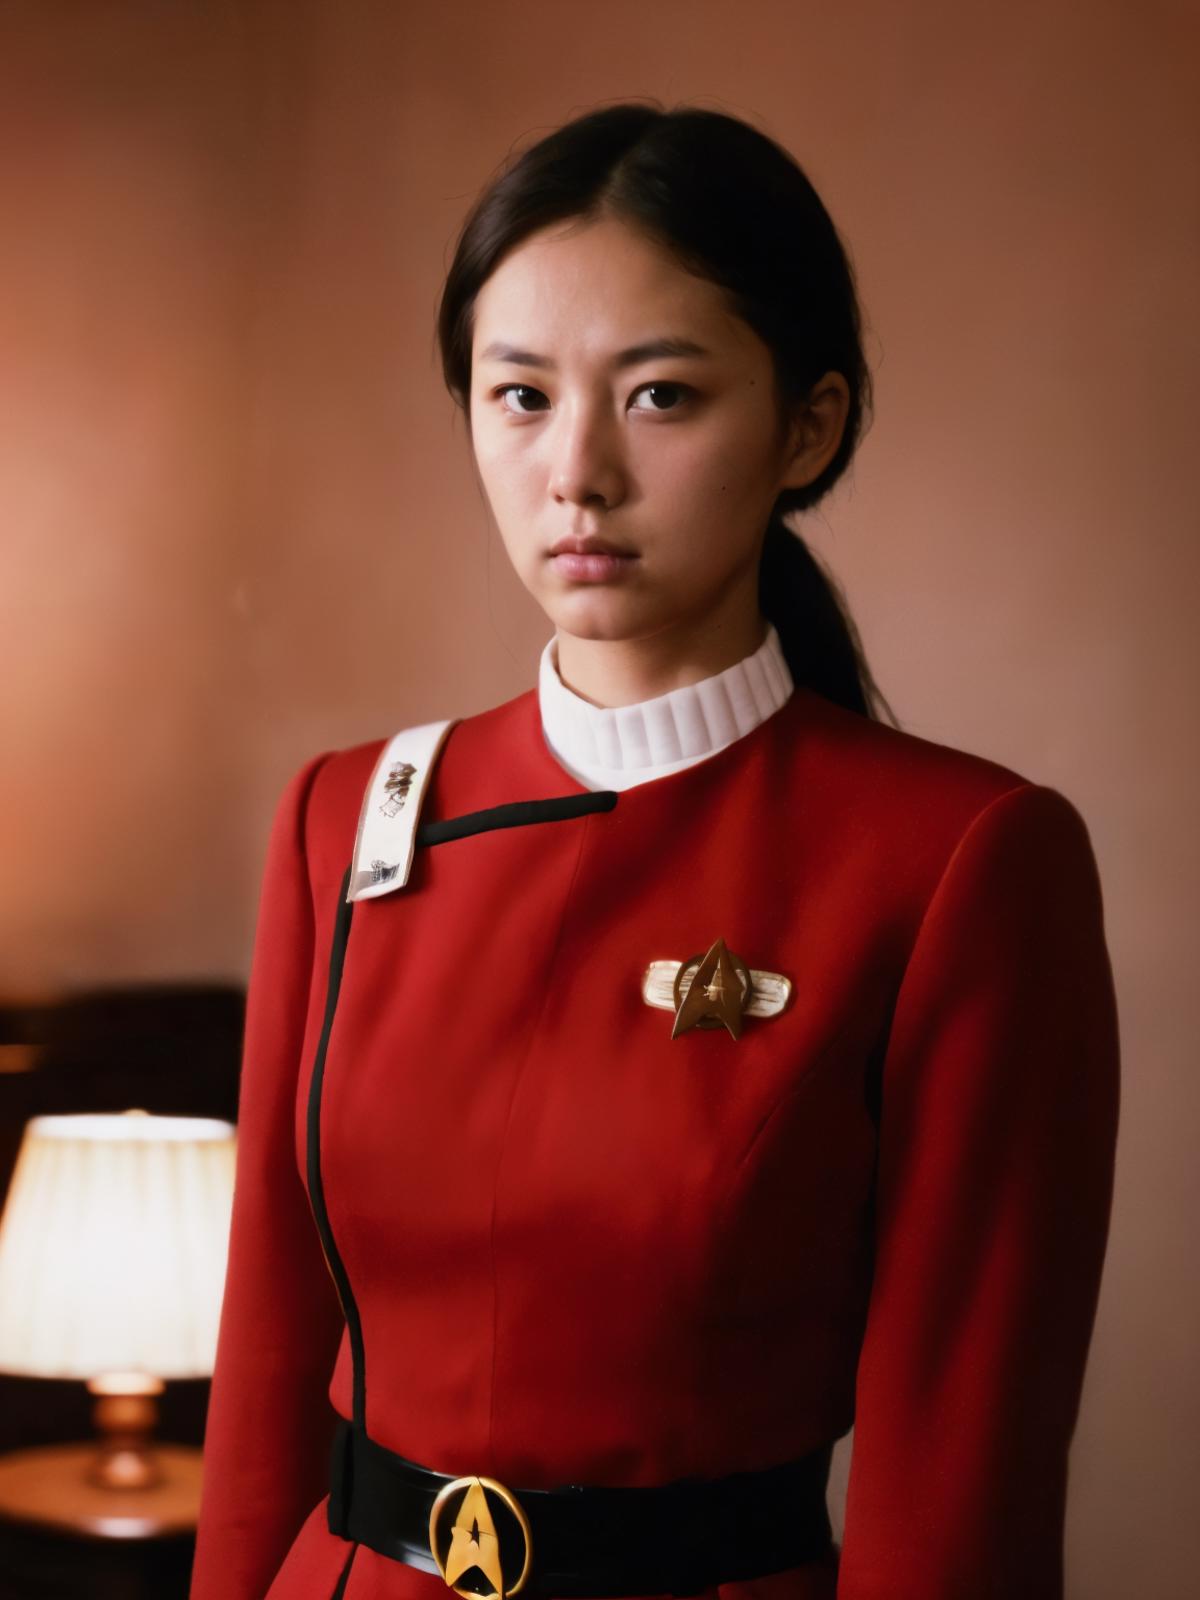 A Woman Wearing a Red Starfleet Uniform with a Pin.